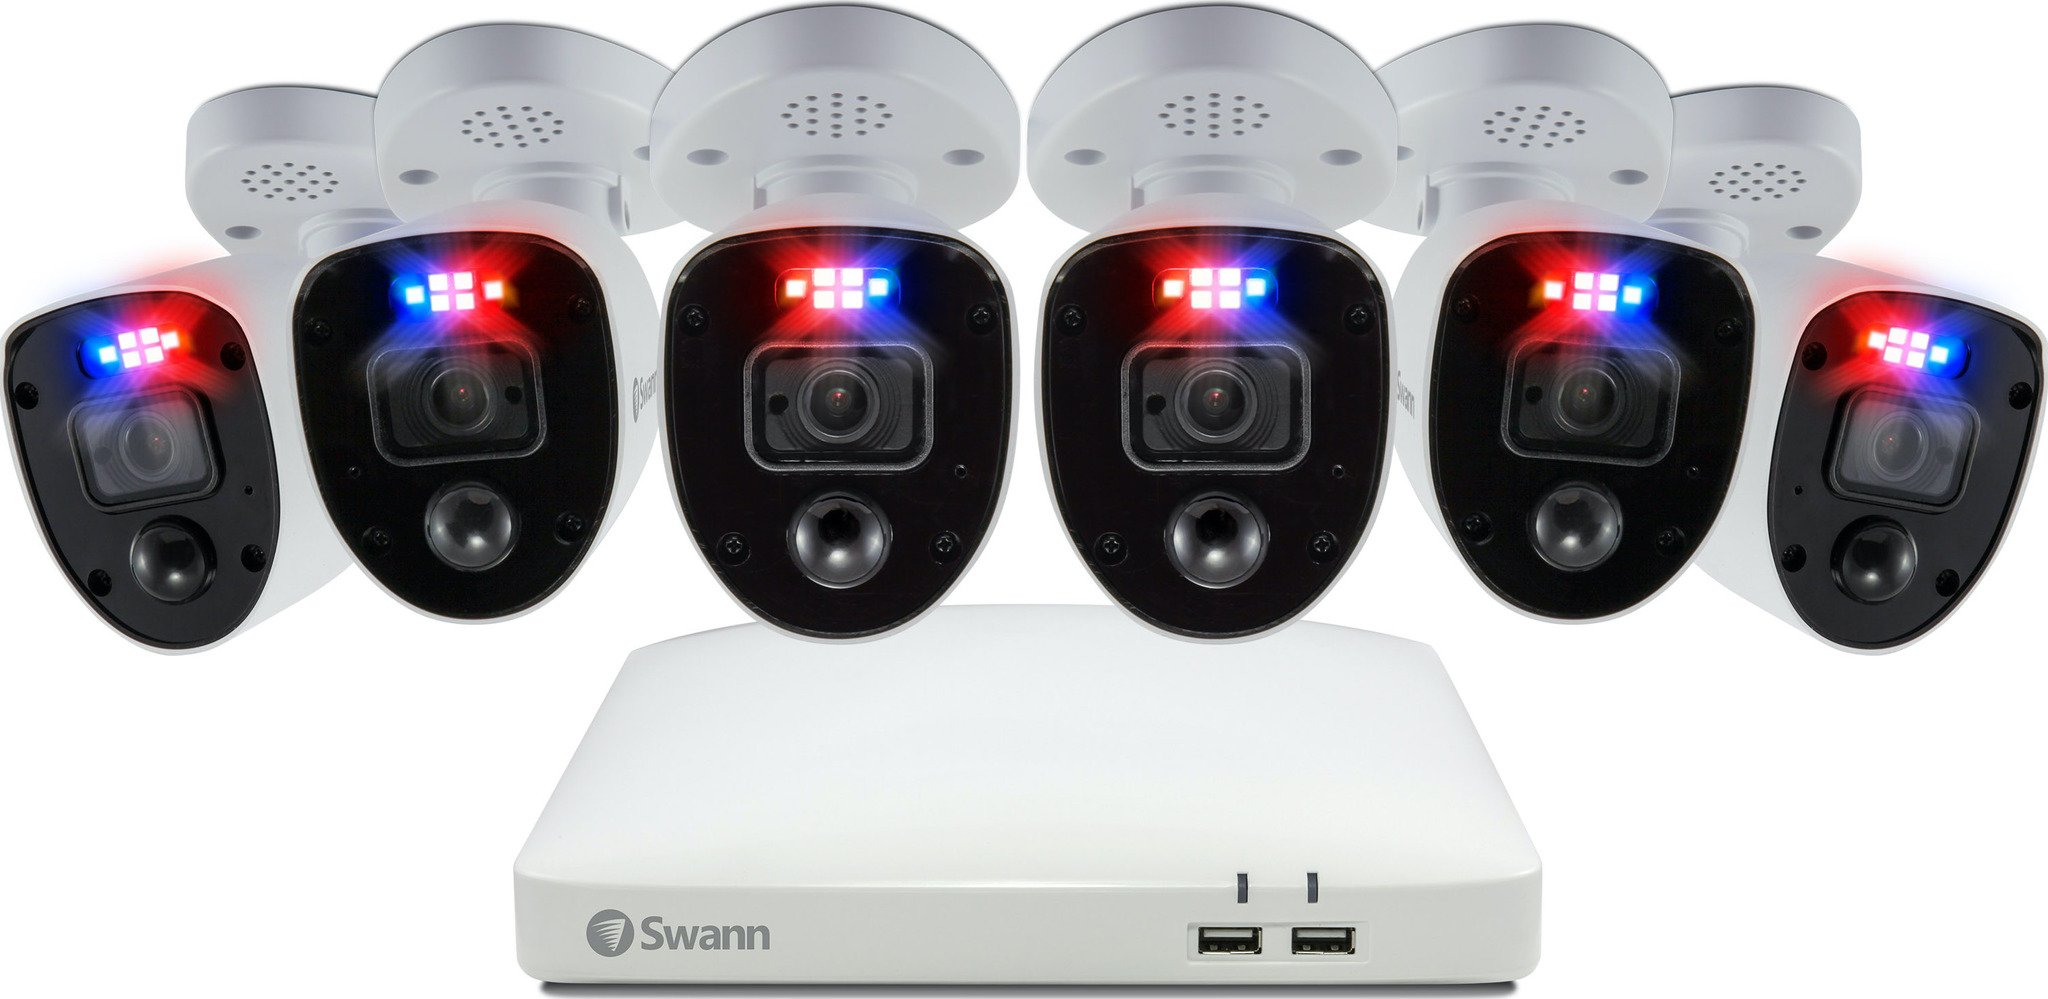 Swann Enforcer Security System 6 camera kit